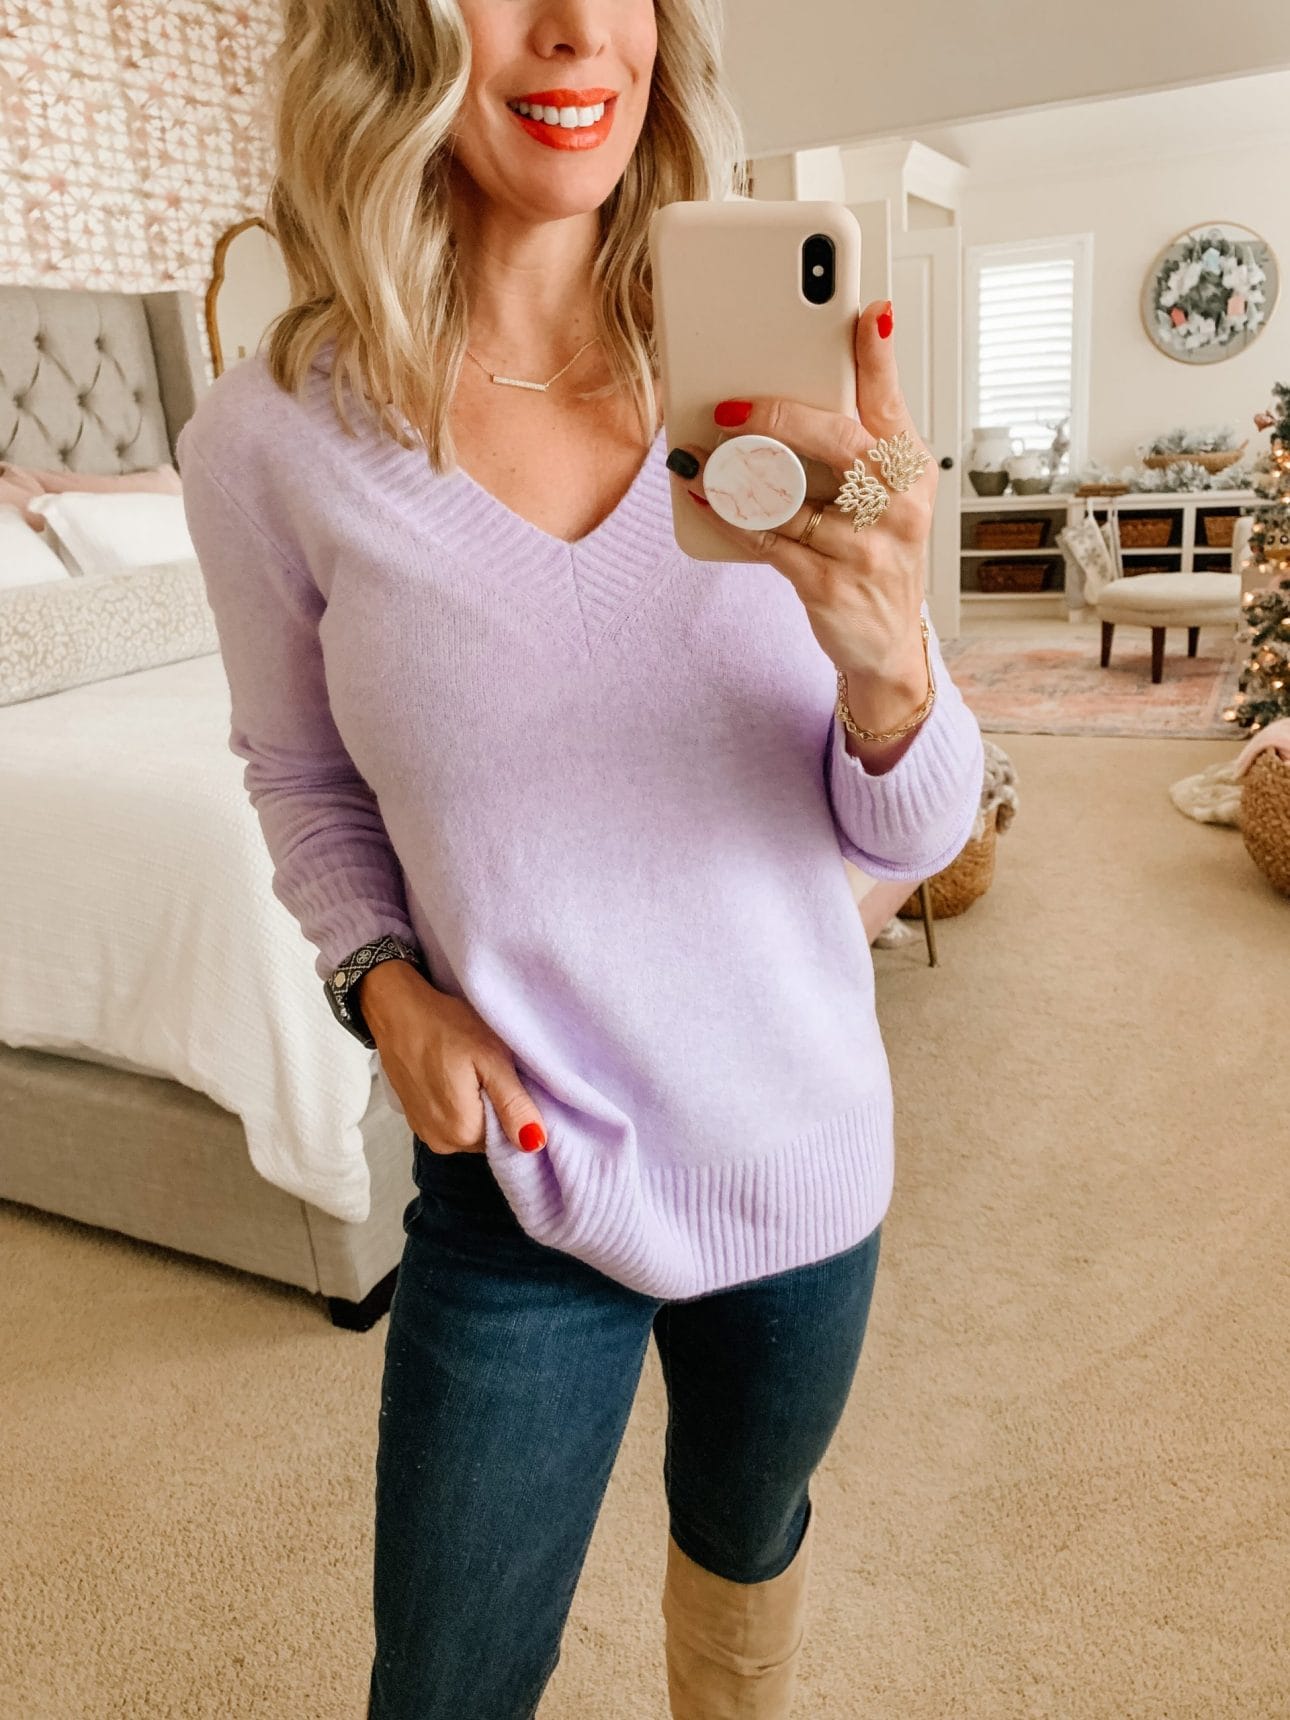 Amazon Fashion, Lavender Sweater, Jeans